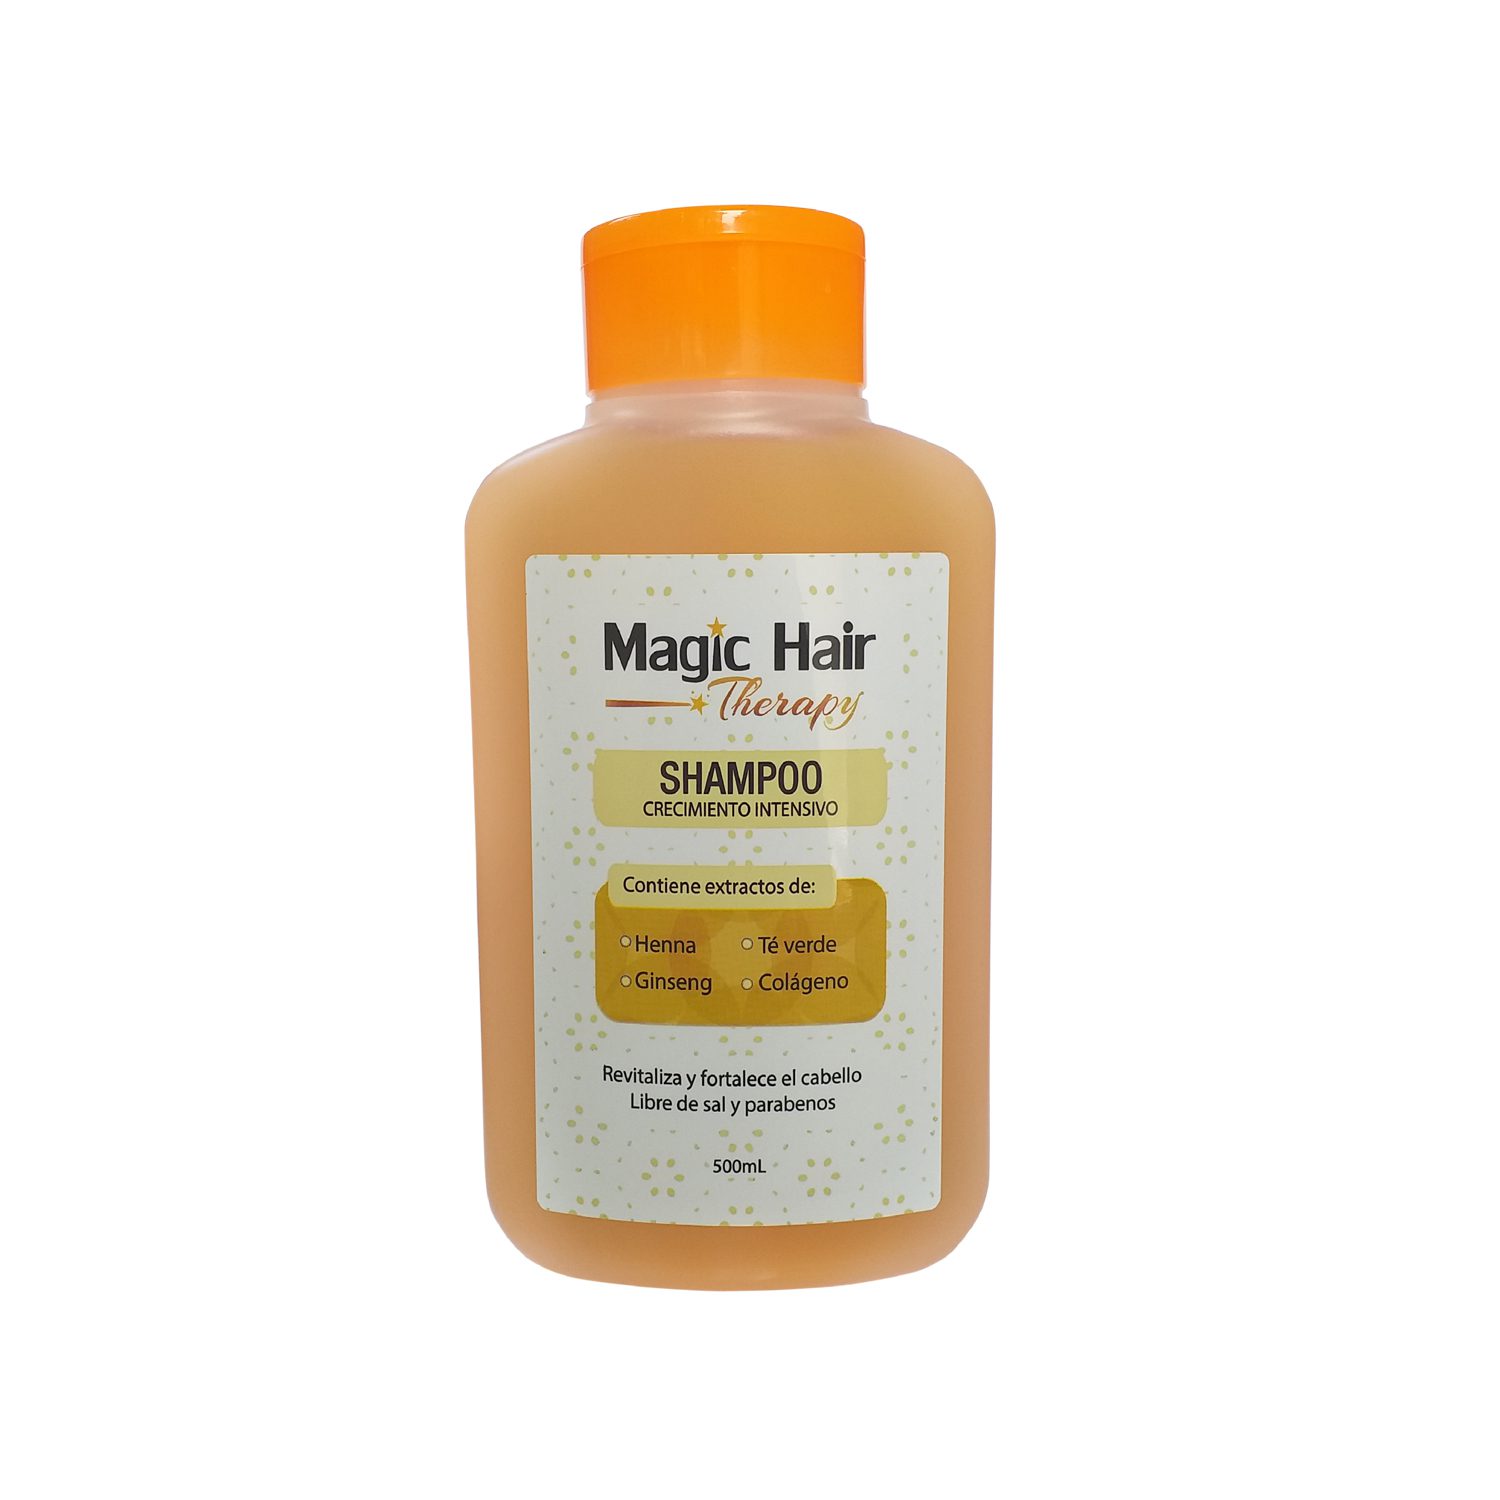 Crecimiento intensivo Shampoo Magic Hair Therapy